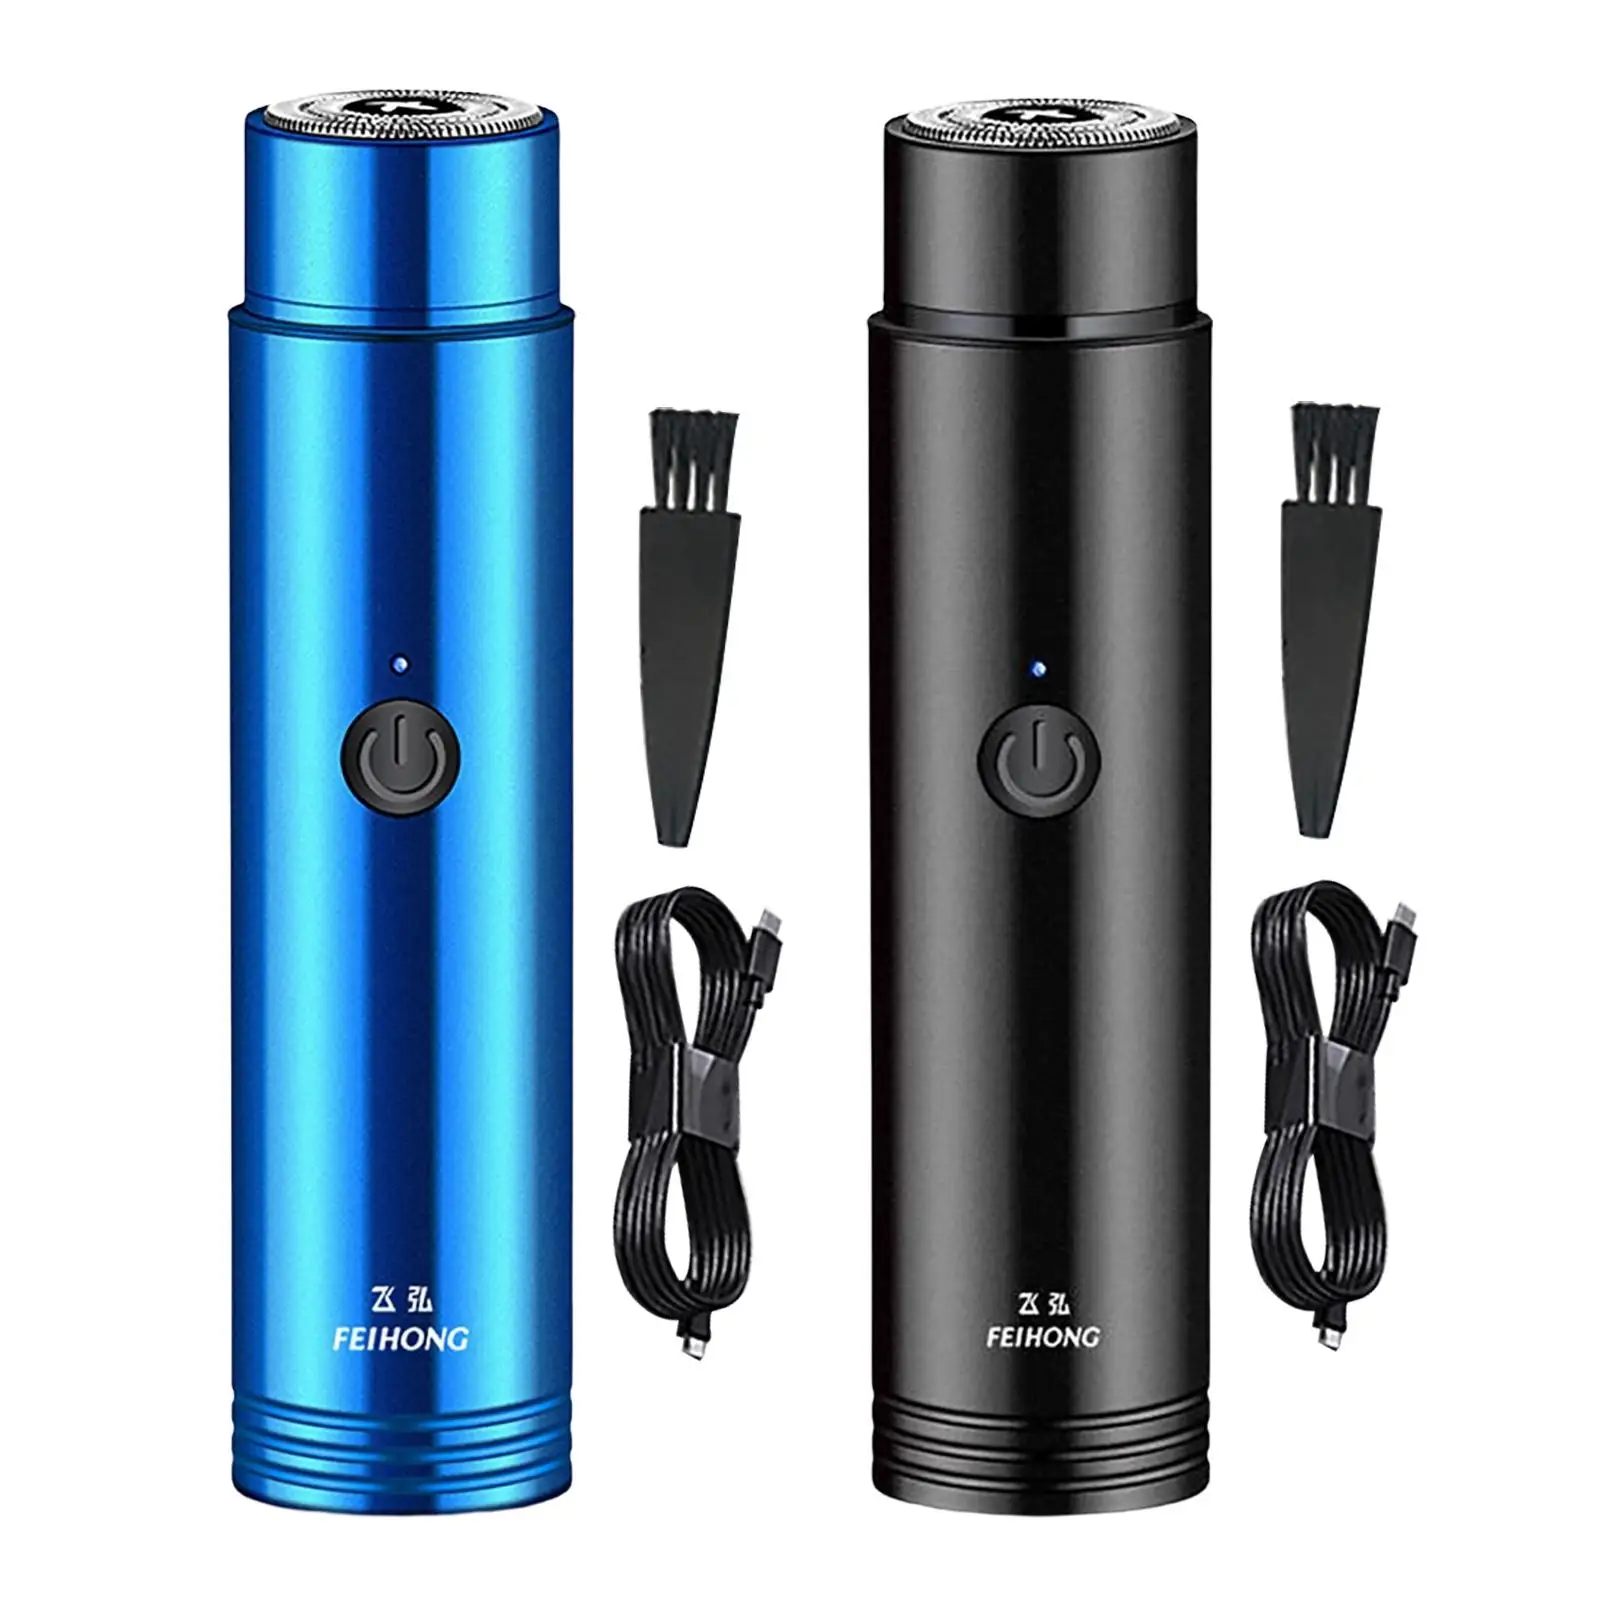 Mini Electric Shaver Portable Waterproof Rotary Razor Wet and Dry Use Lightweight Cordless Pocket Razor USB Charging Razor